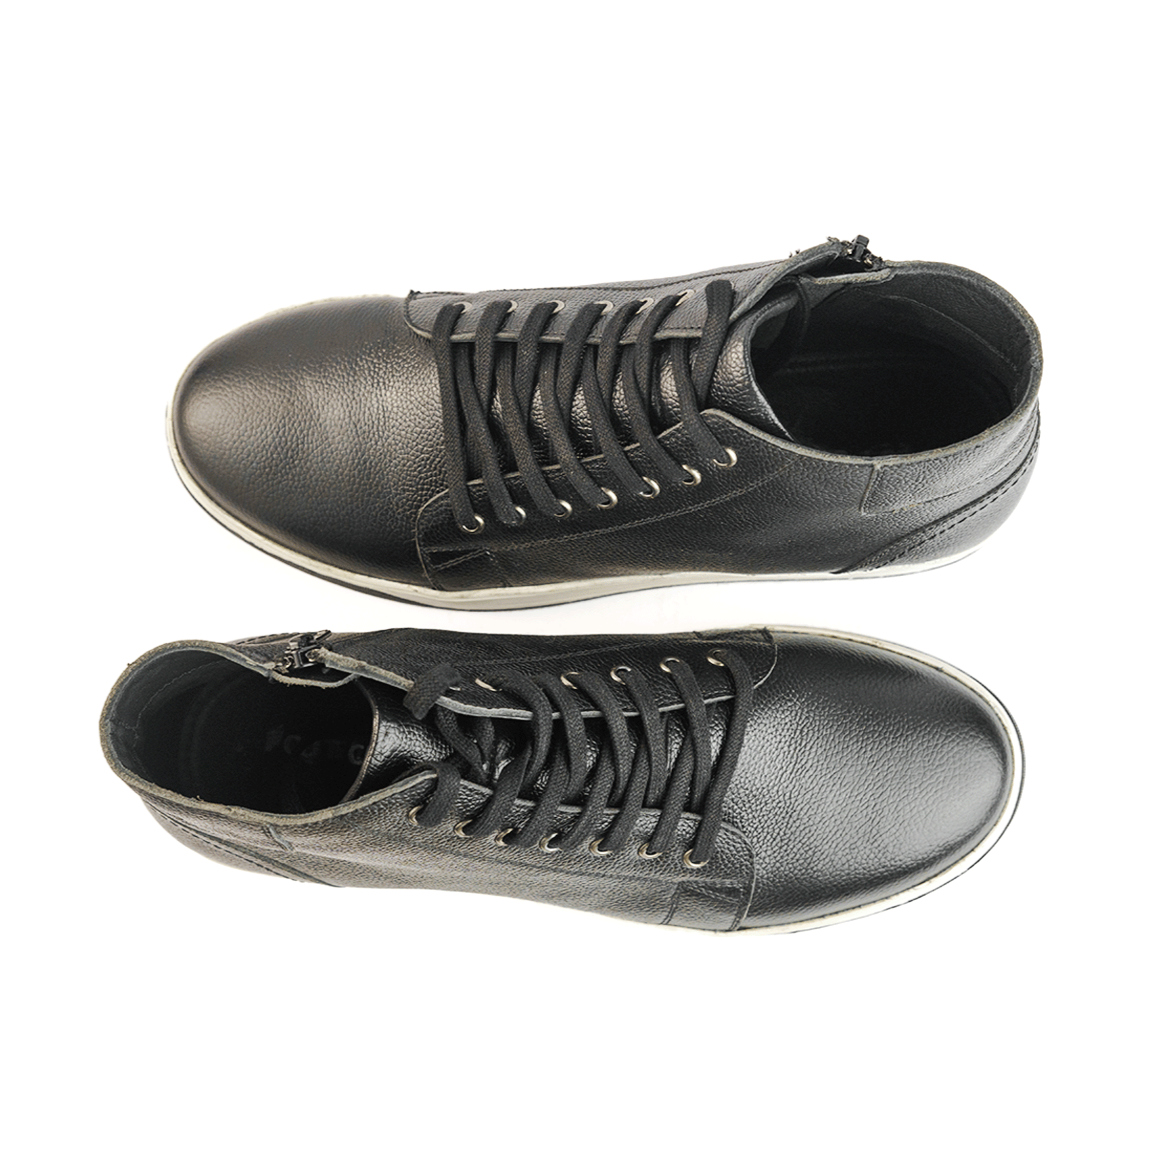 Men lace-up black sneakers